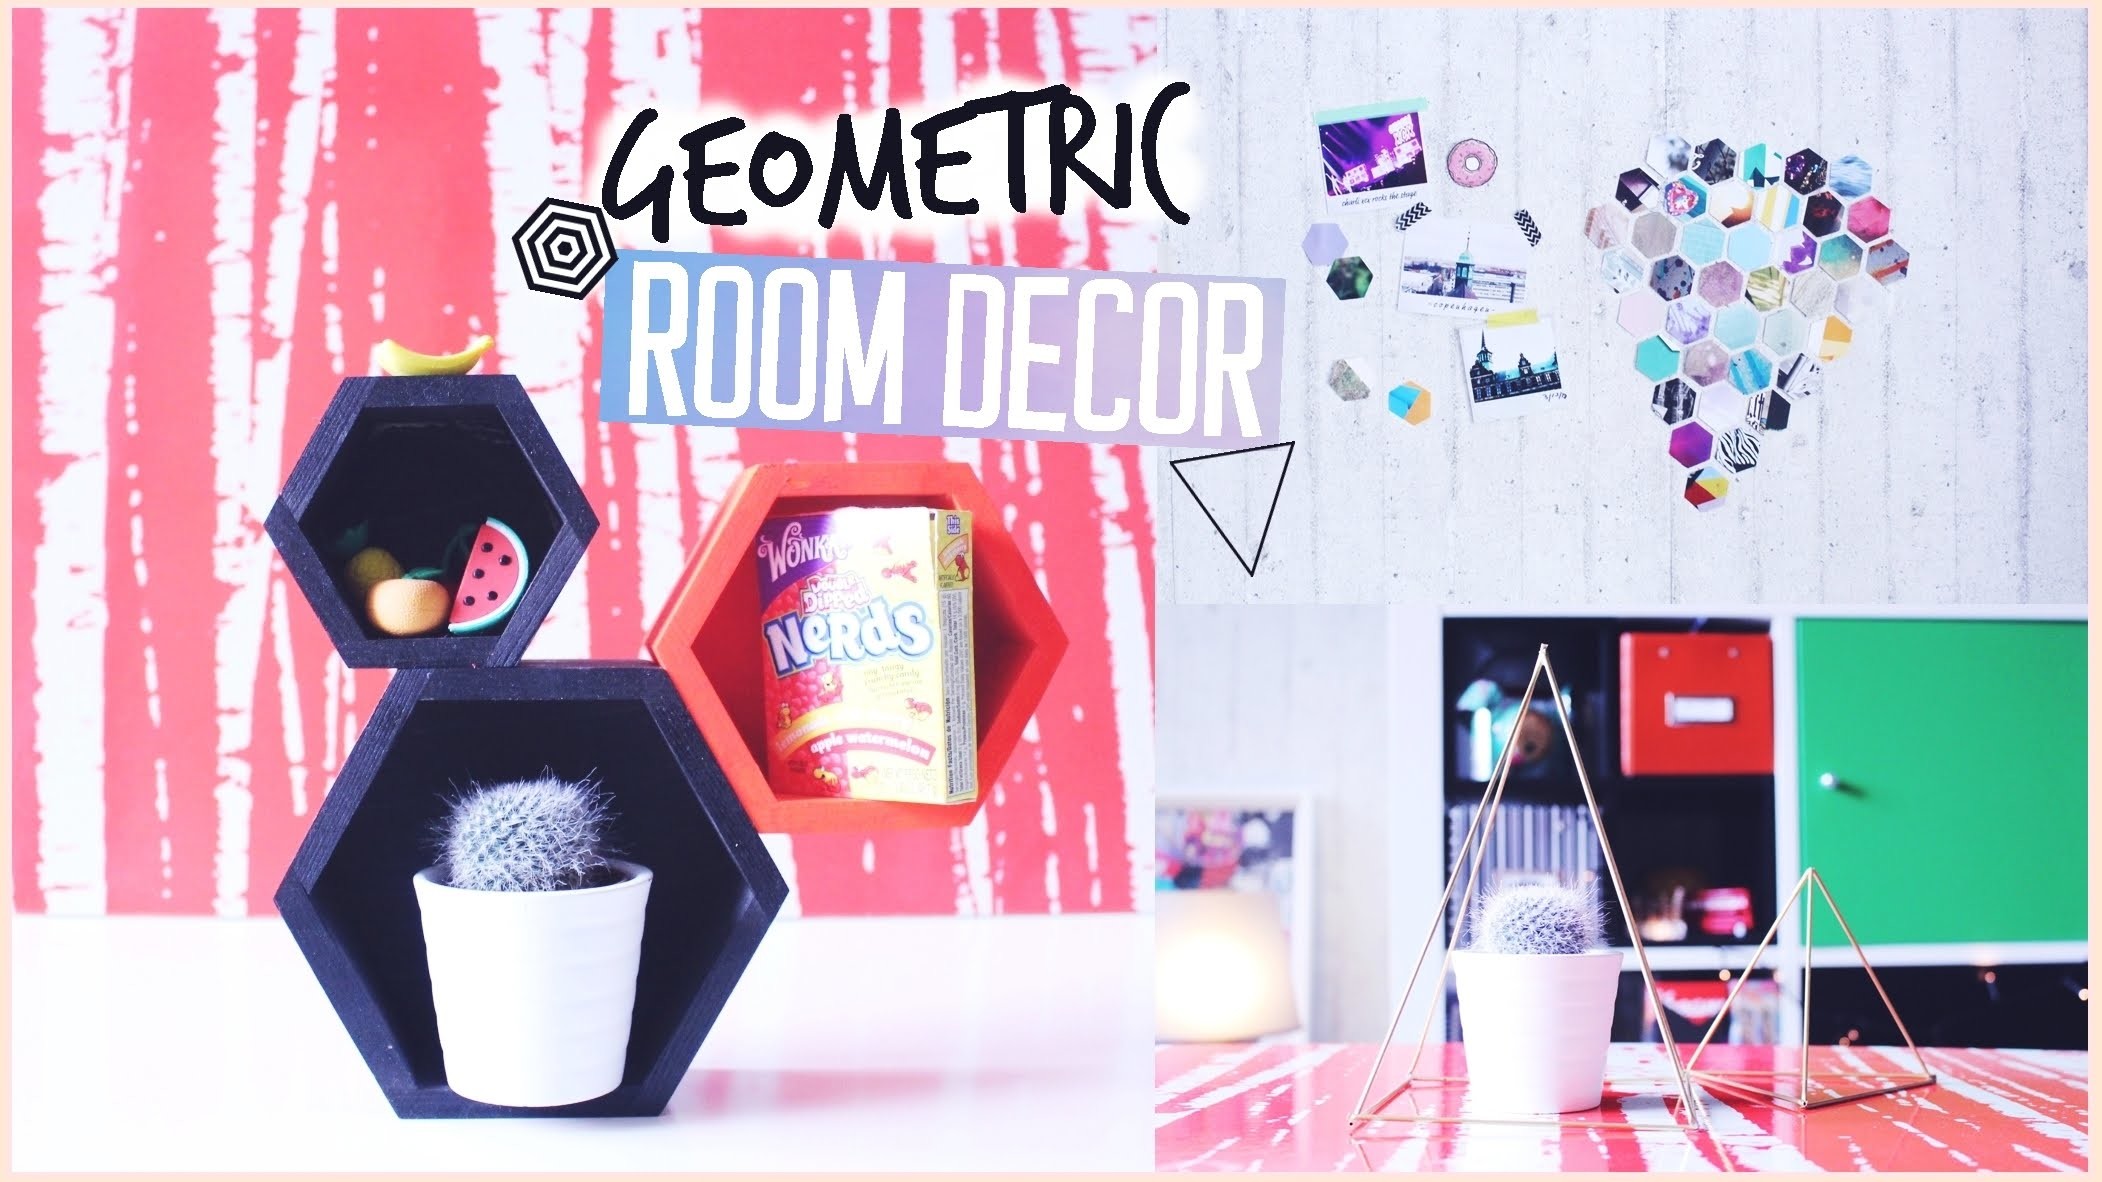 GEOMETRIC Room Decor Ideen! ♢ Einfach & günstig!